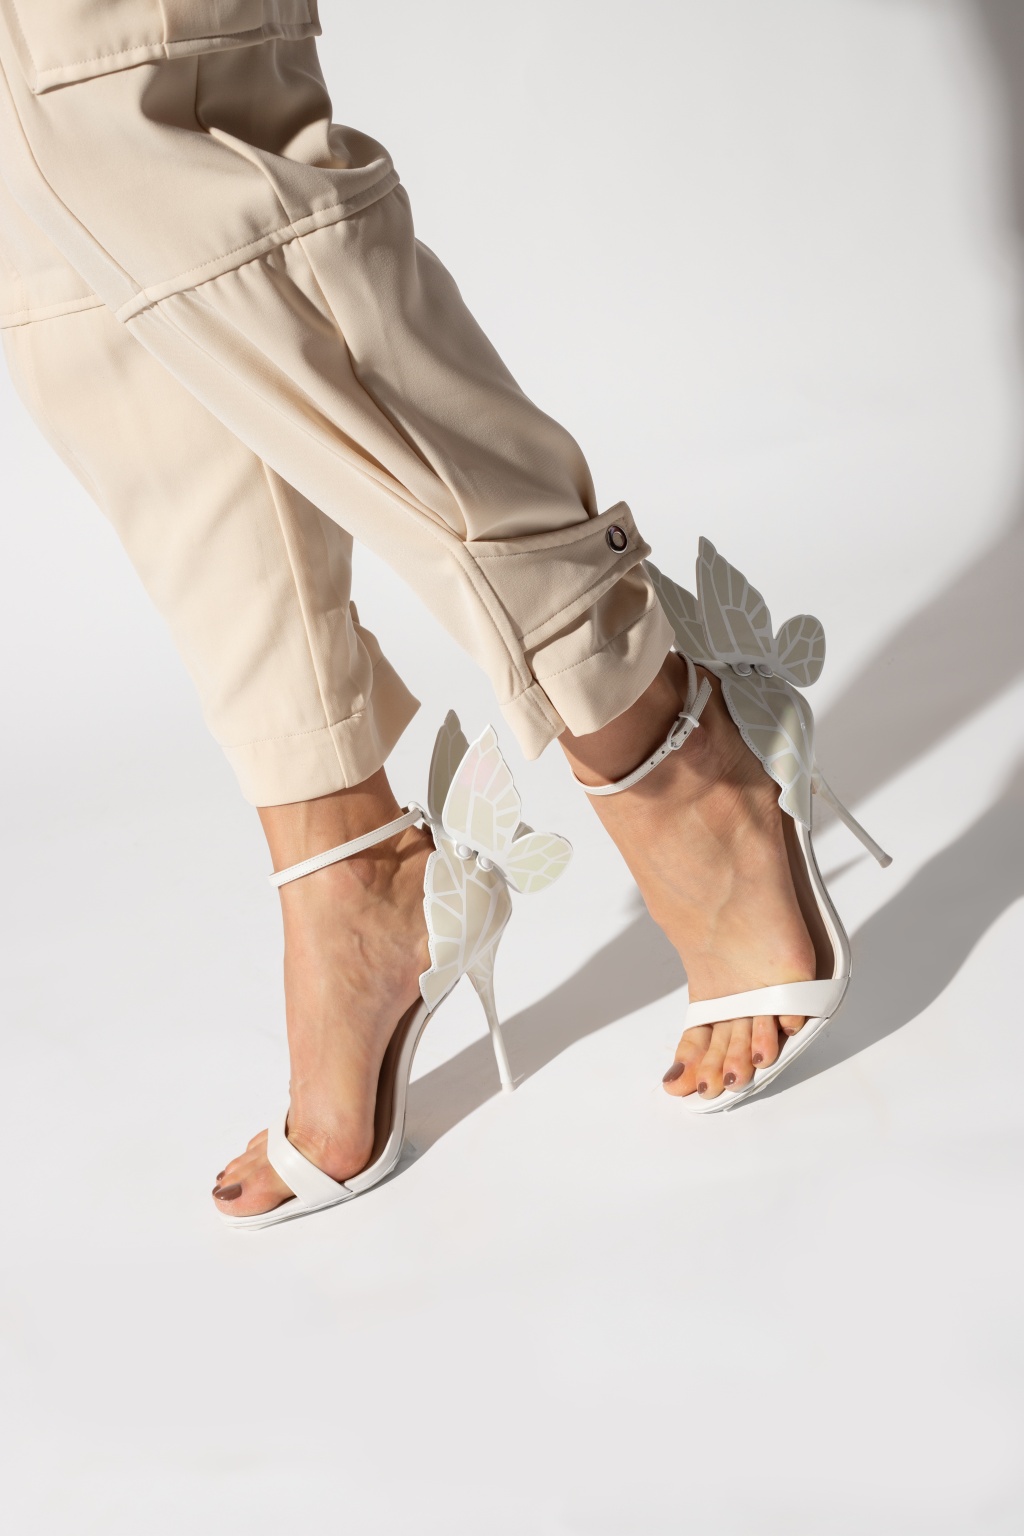 Sophia Webster 'Chiara' stiletto sandals | Women's Shoes | Vitkac